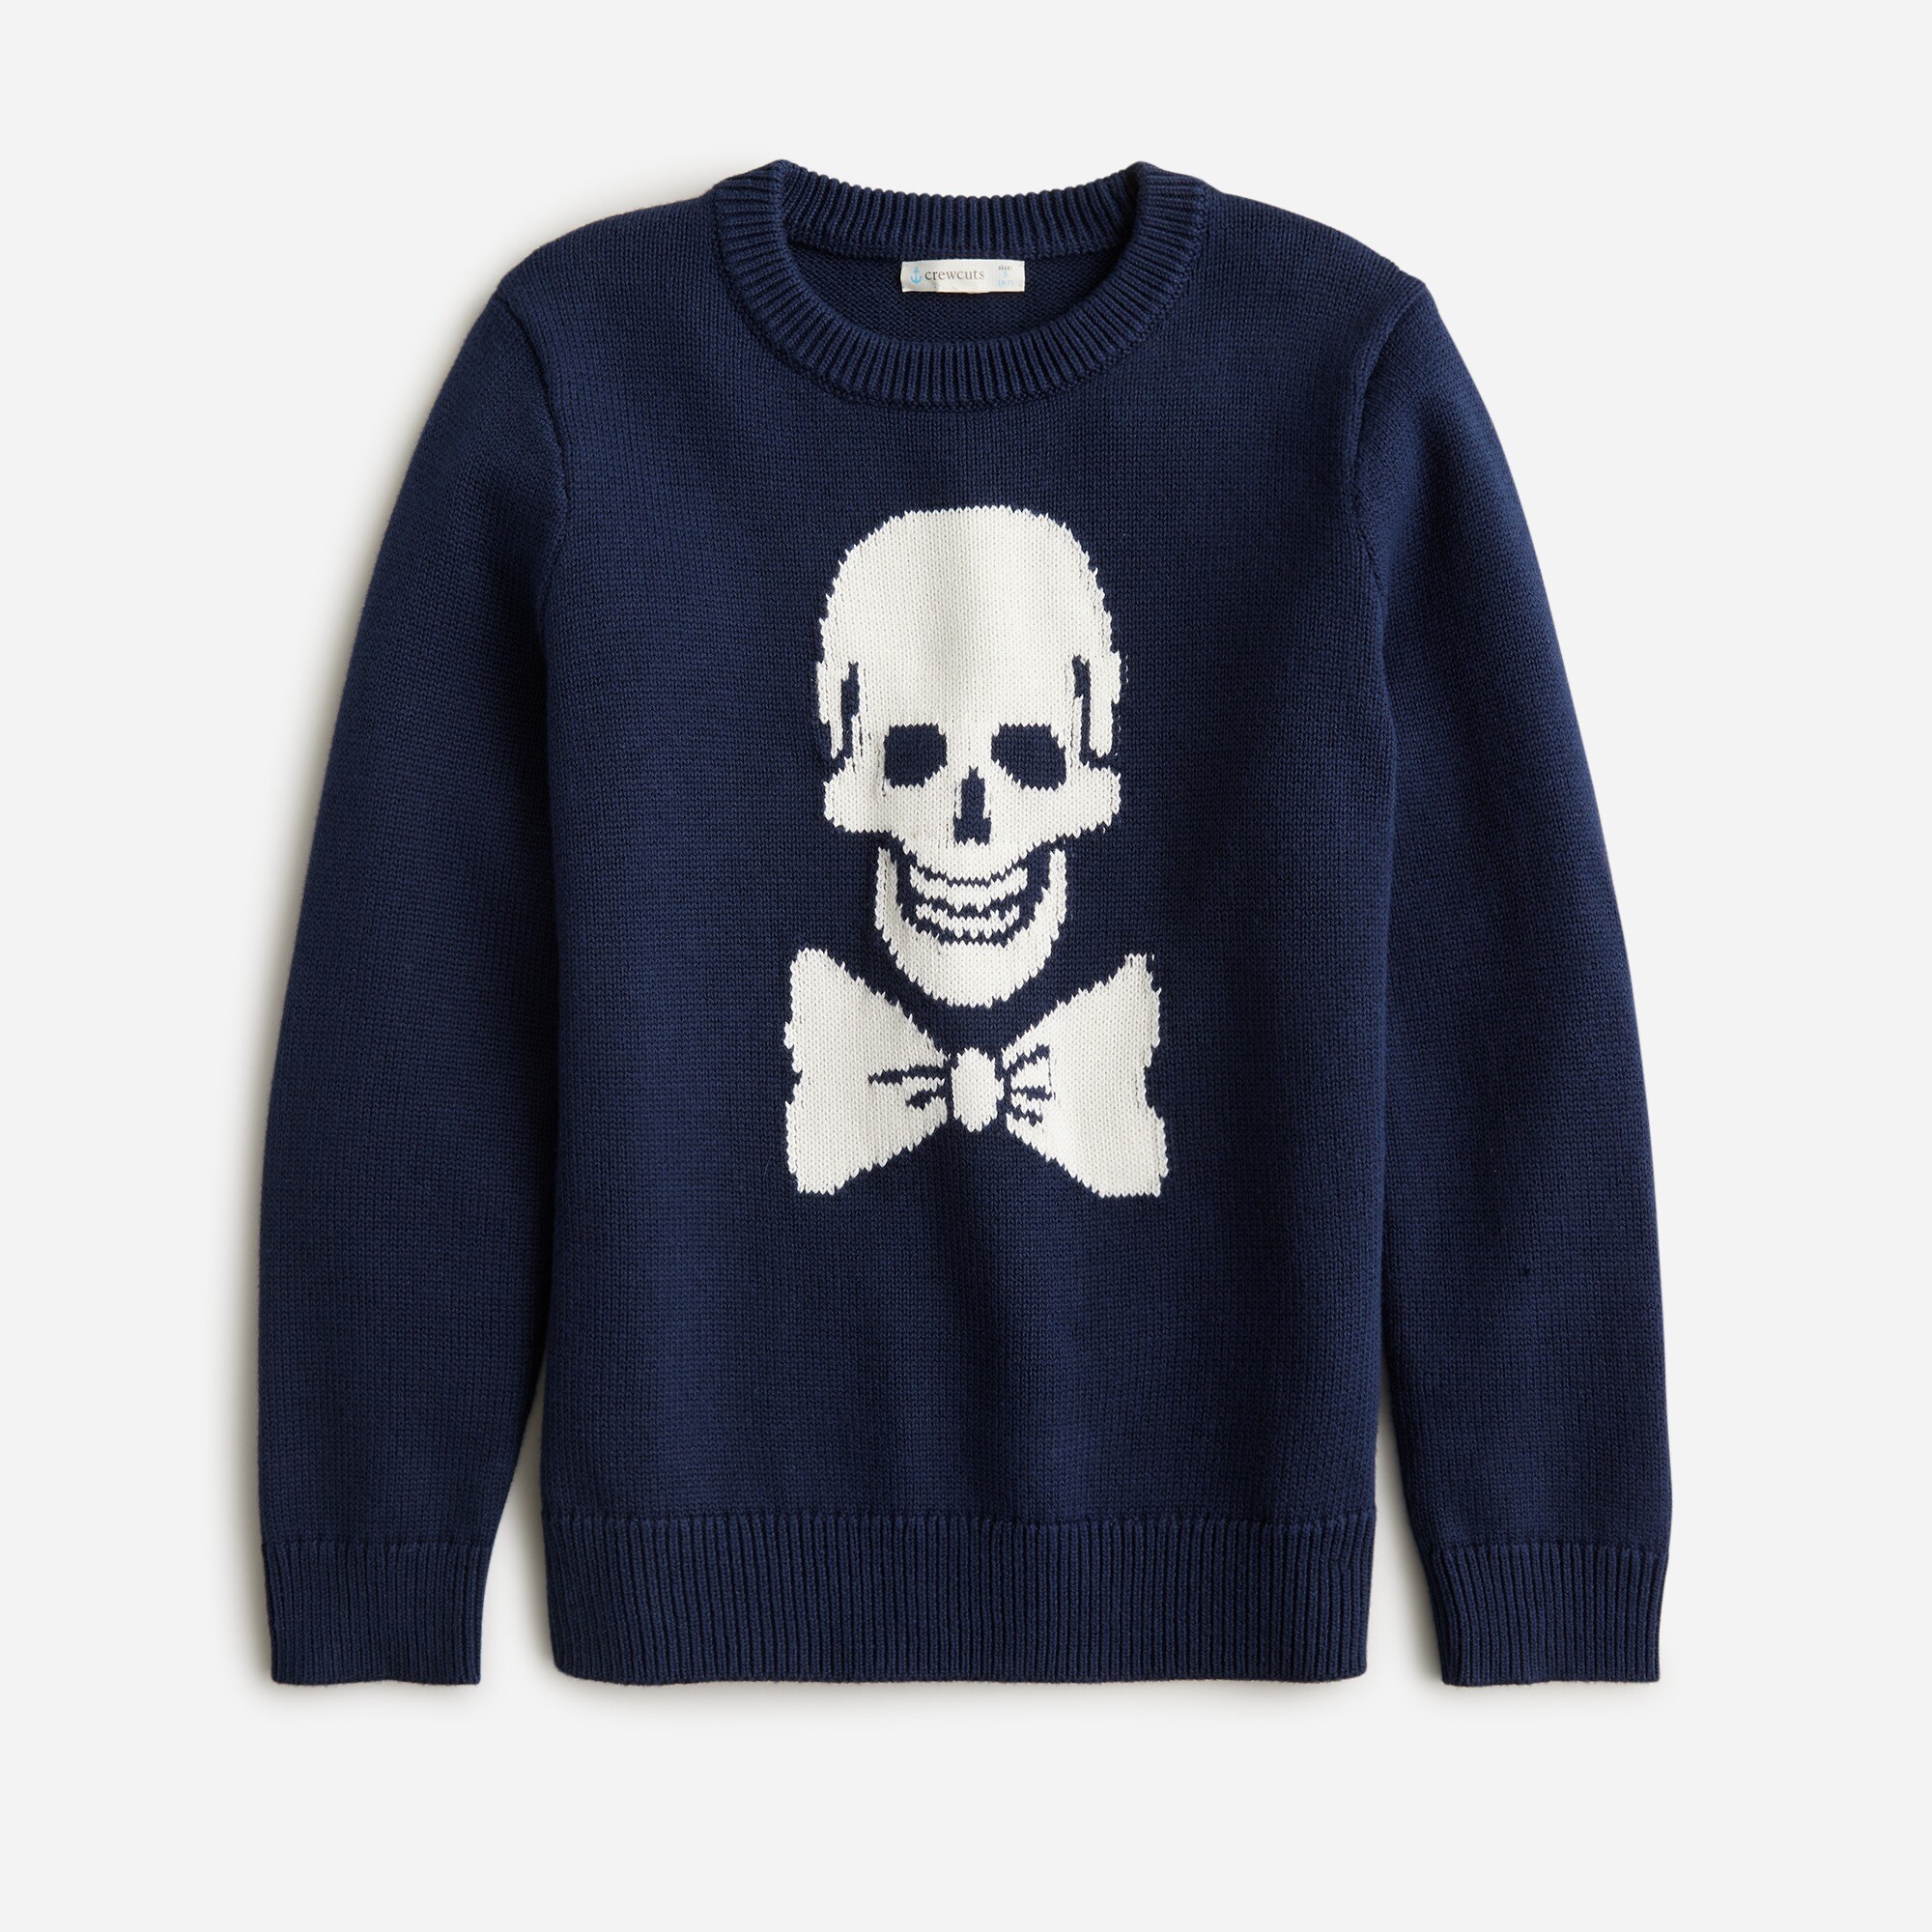  Kids' skull crewneck sweater